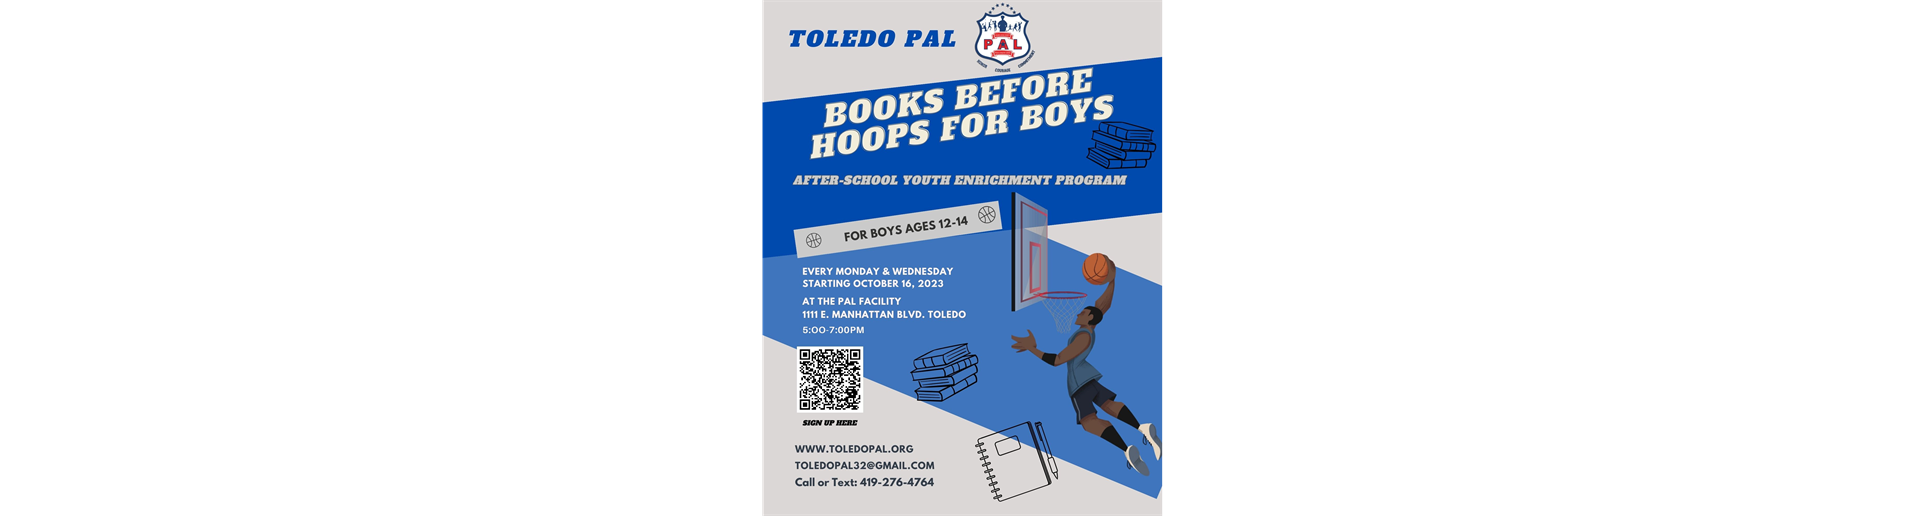 Books B4 Hoops Boys Youth Enrichment Program